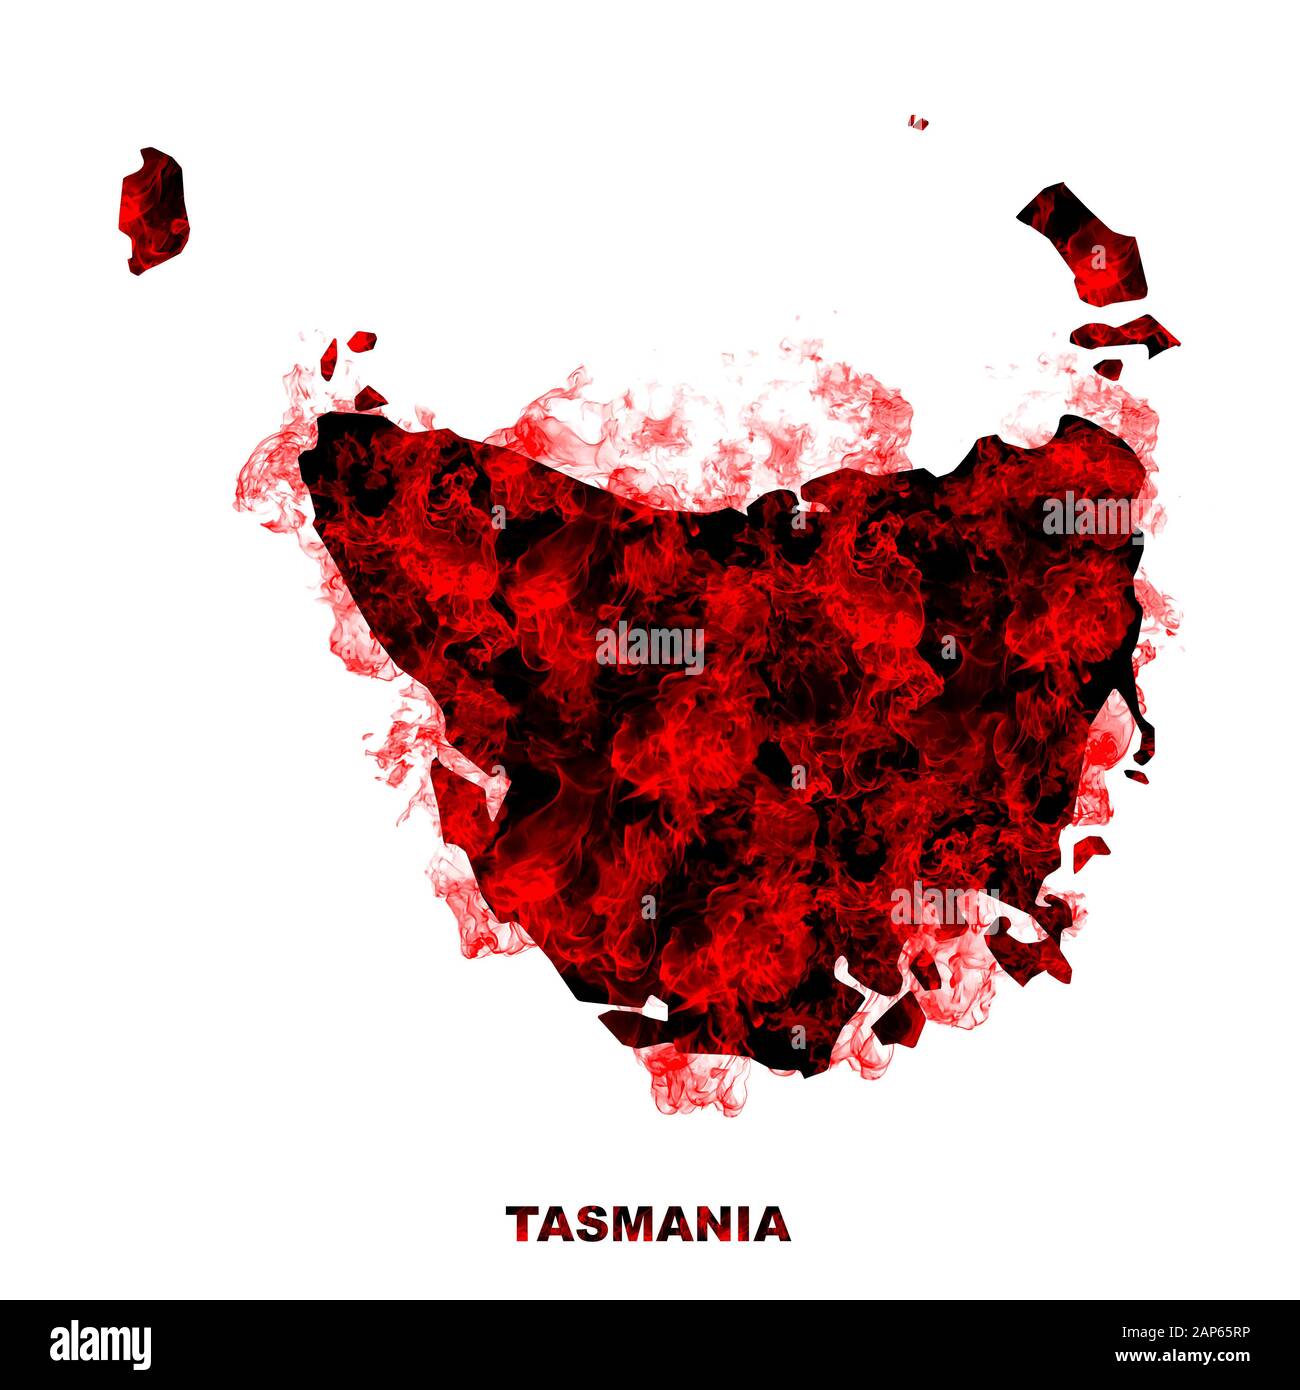 Tasmania Map Fire on White Background. Bushfire In Australia Wilderness. Save Australia Concept. Series of Massive Bushfires Across Australia. Stock Photo